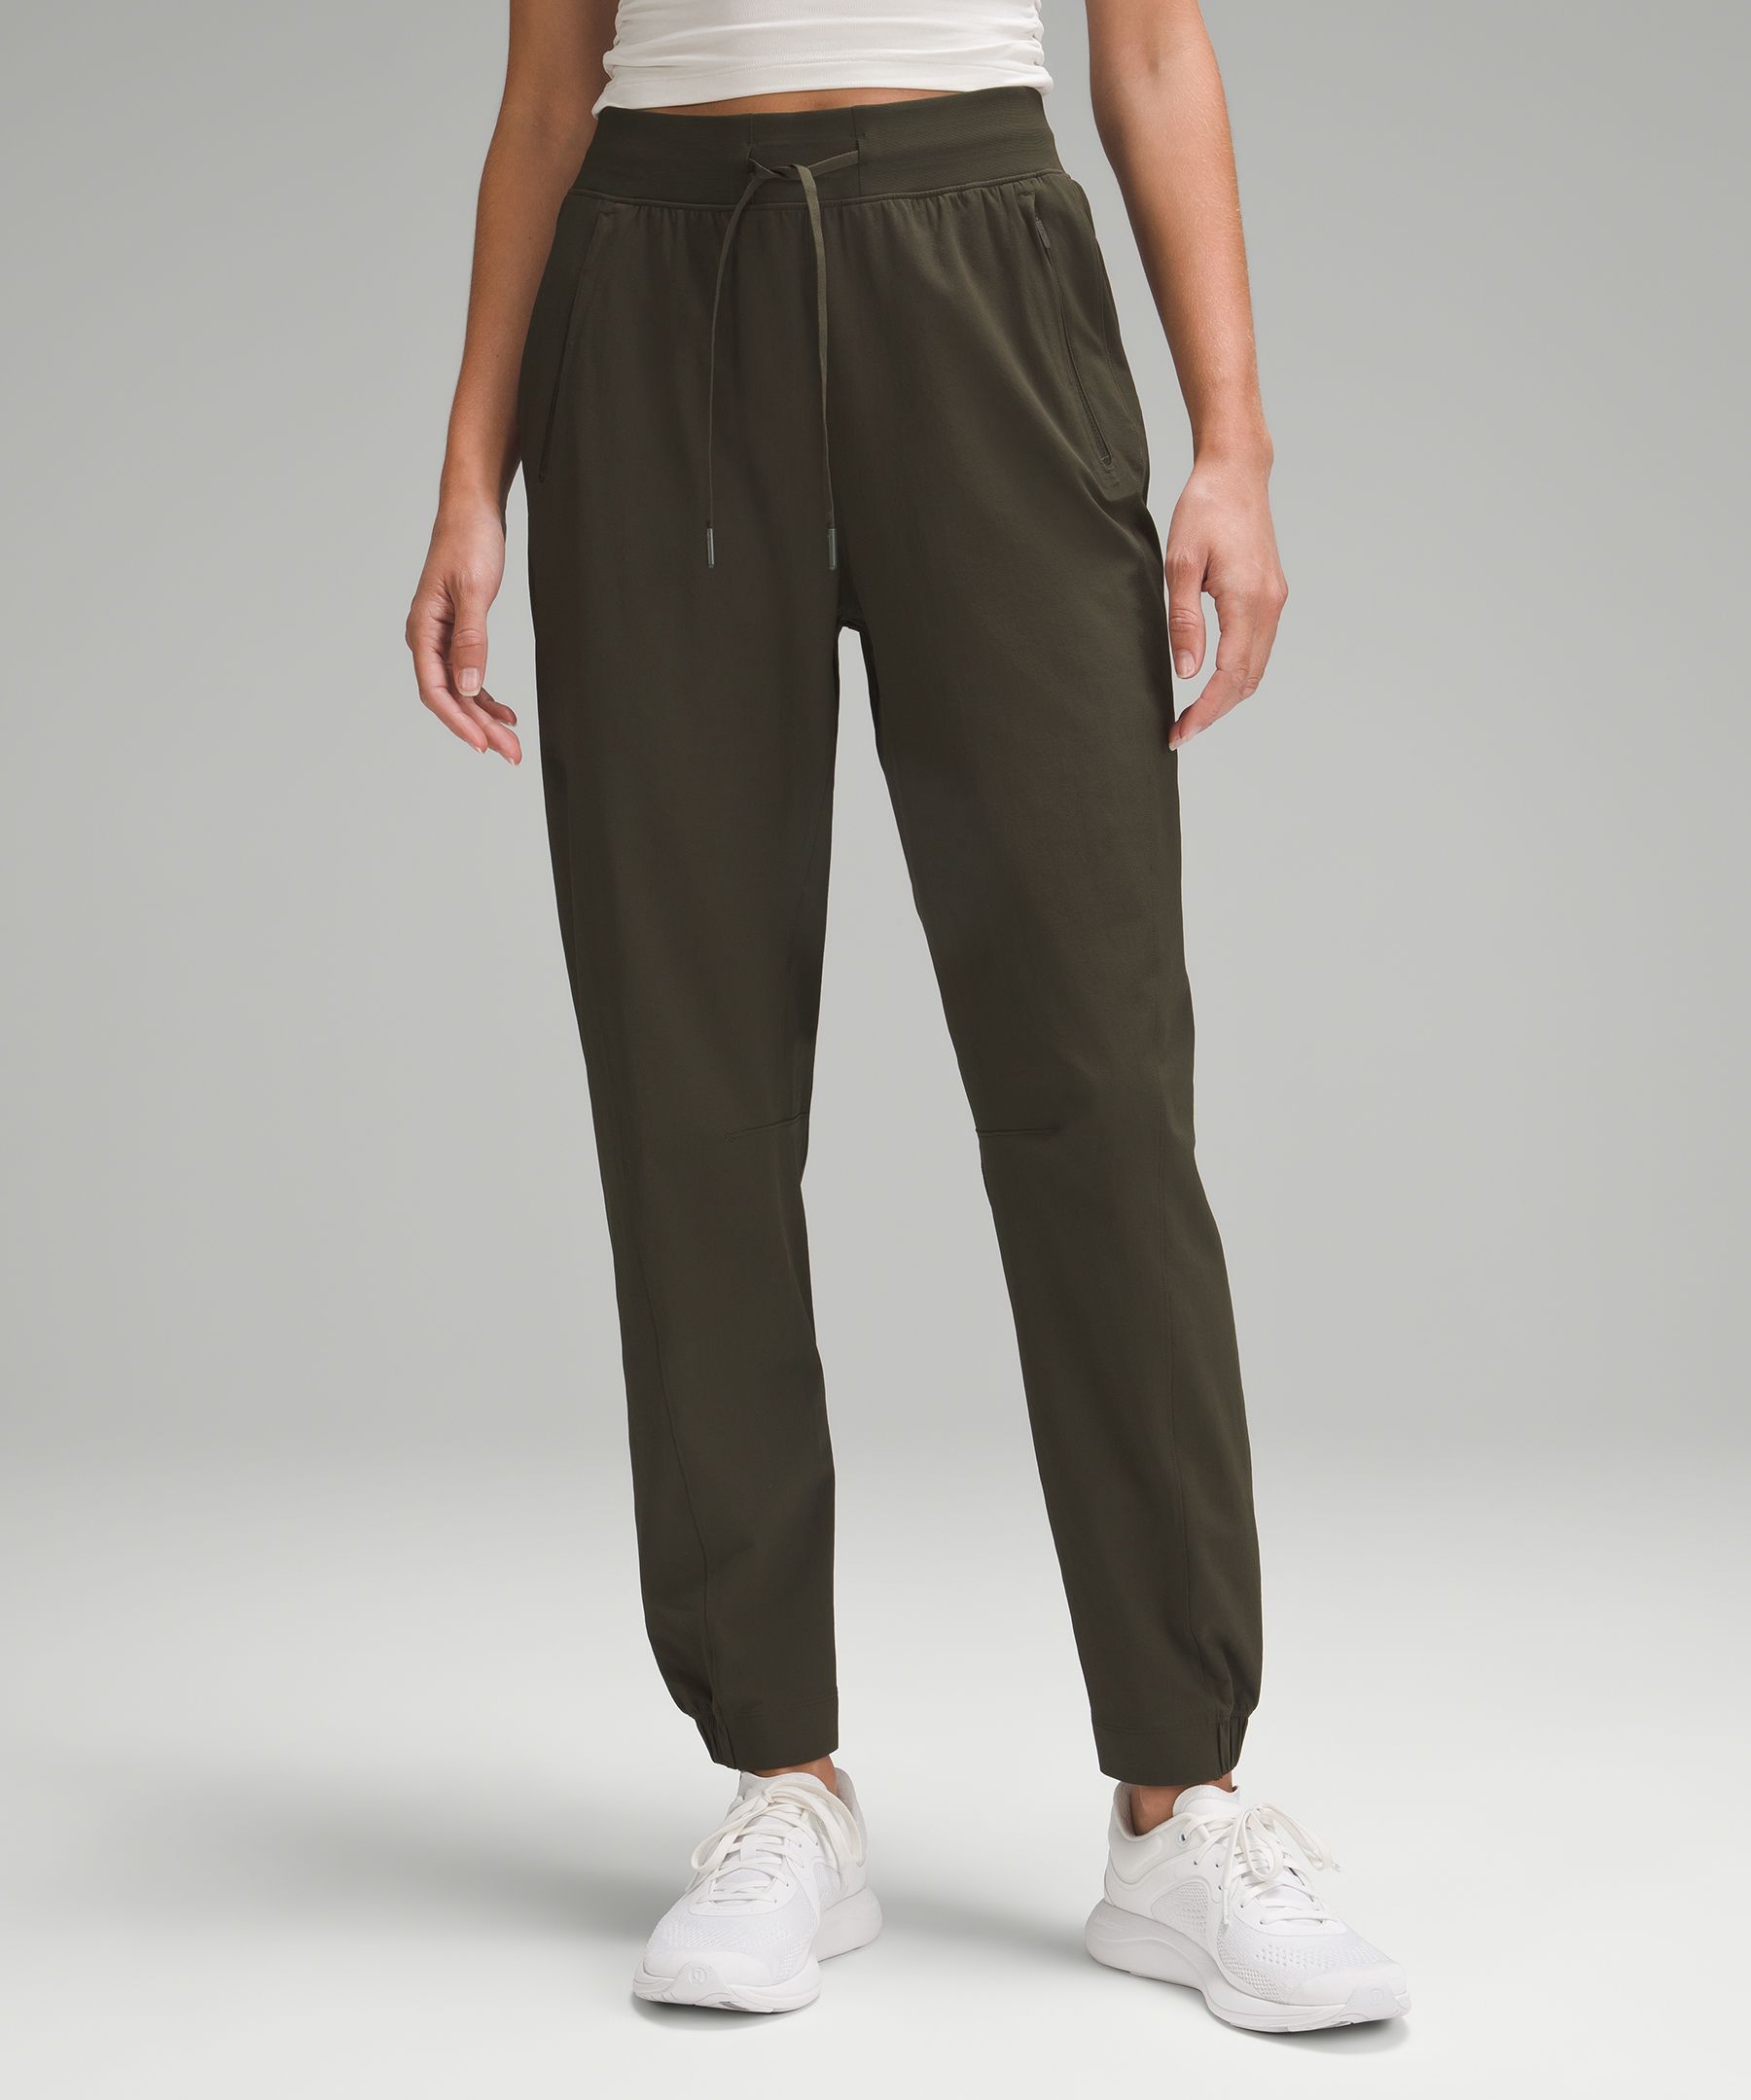 Lululemon Sweatpants Joggers Green Size 8 - $85 - From jayla